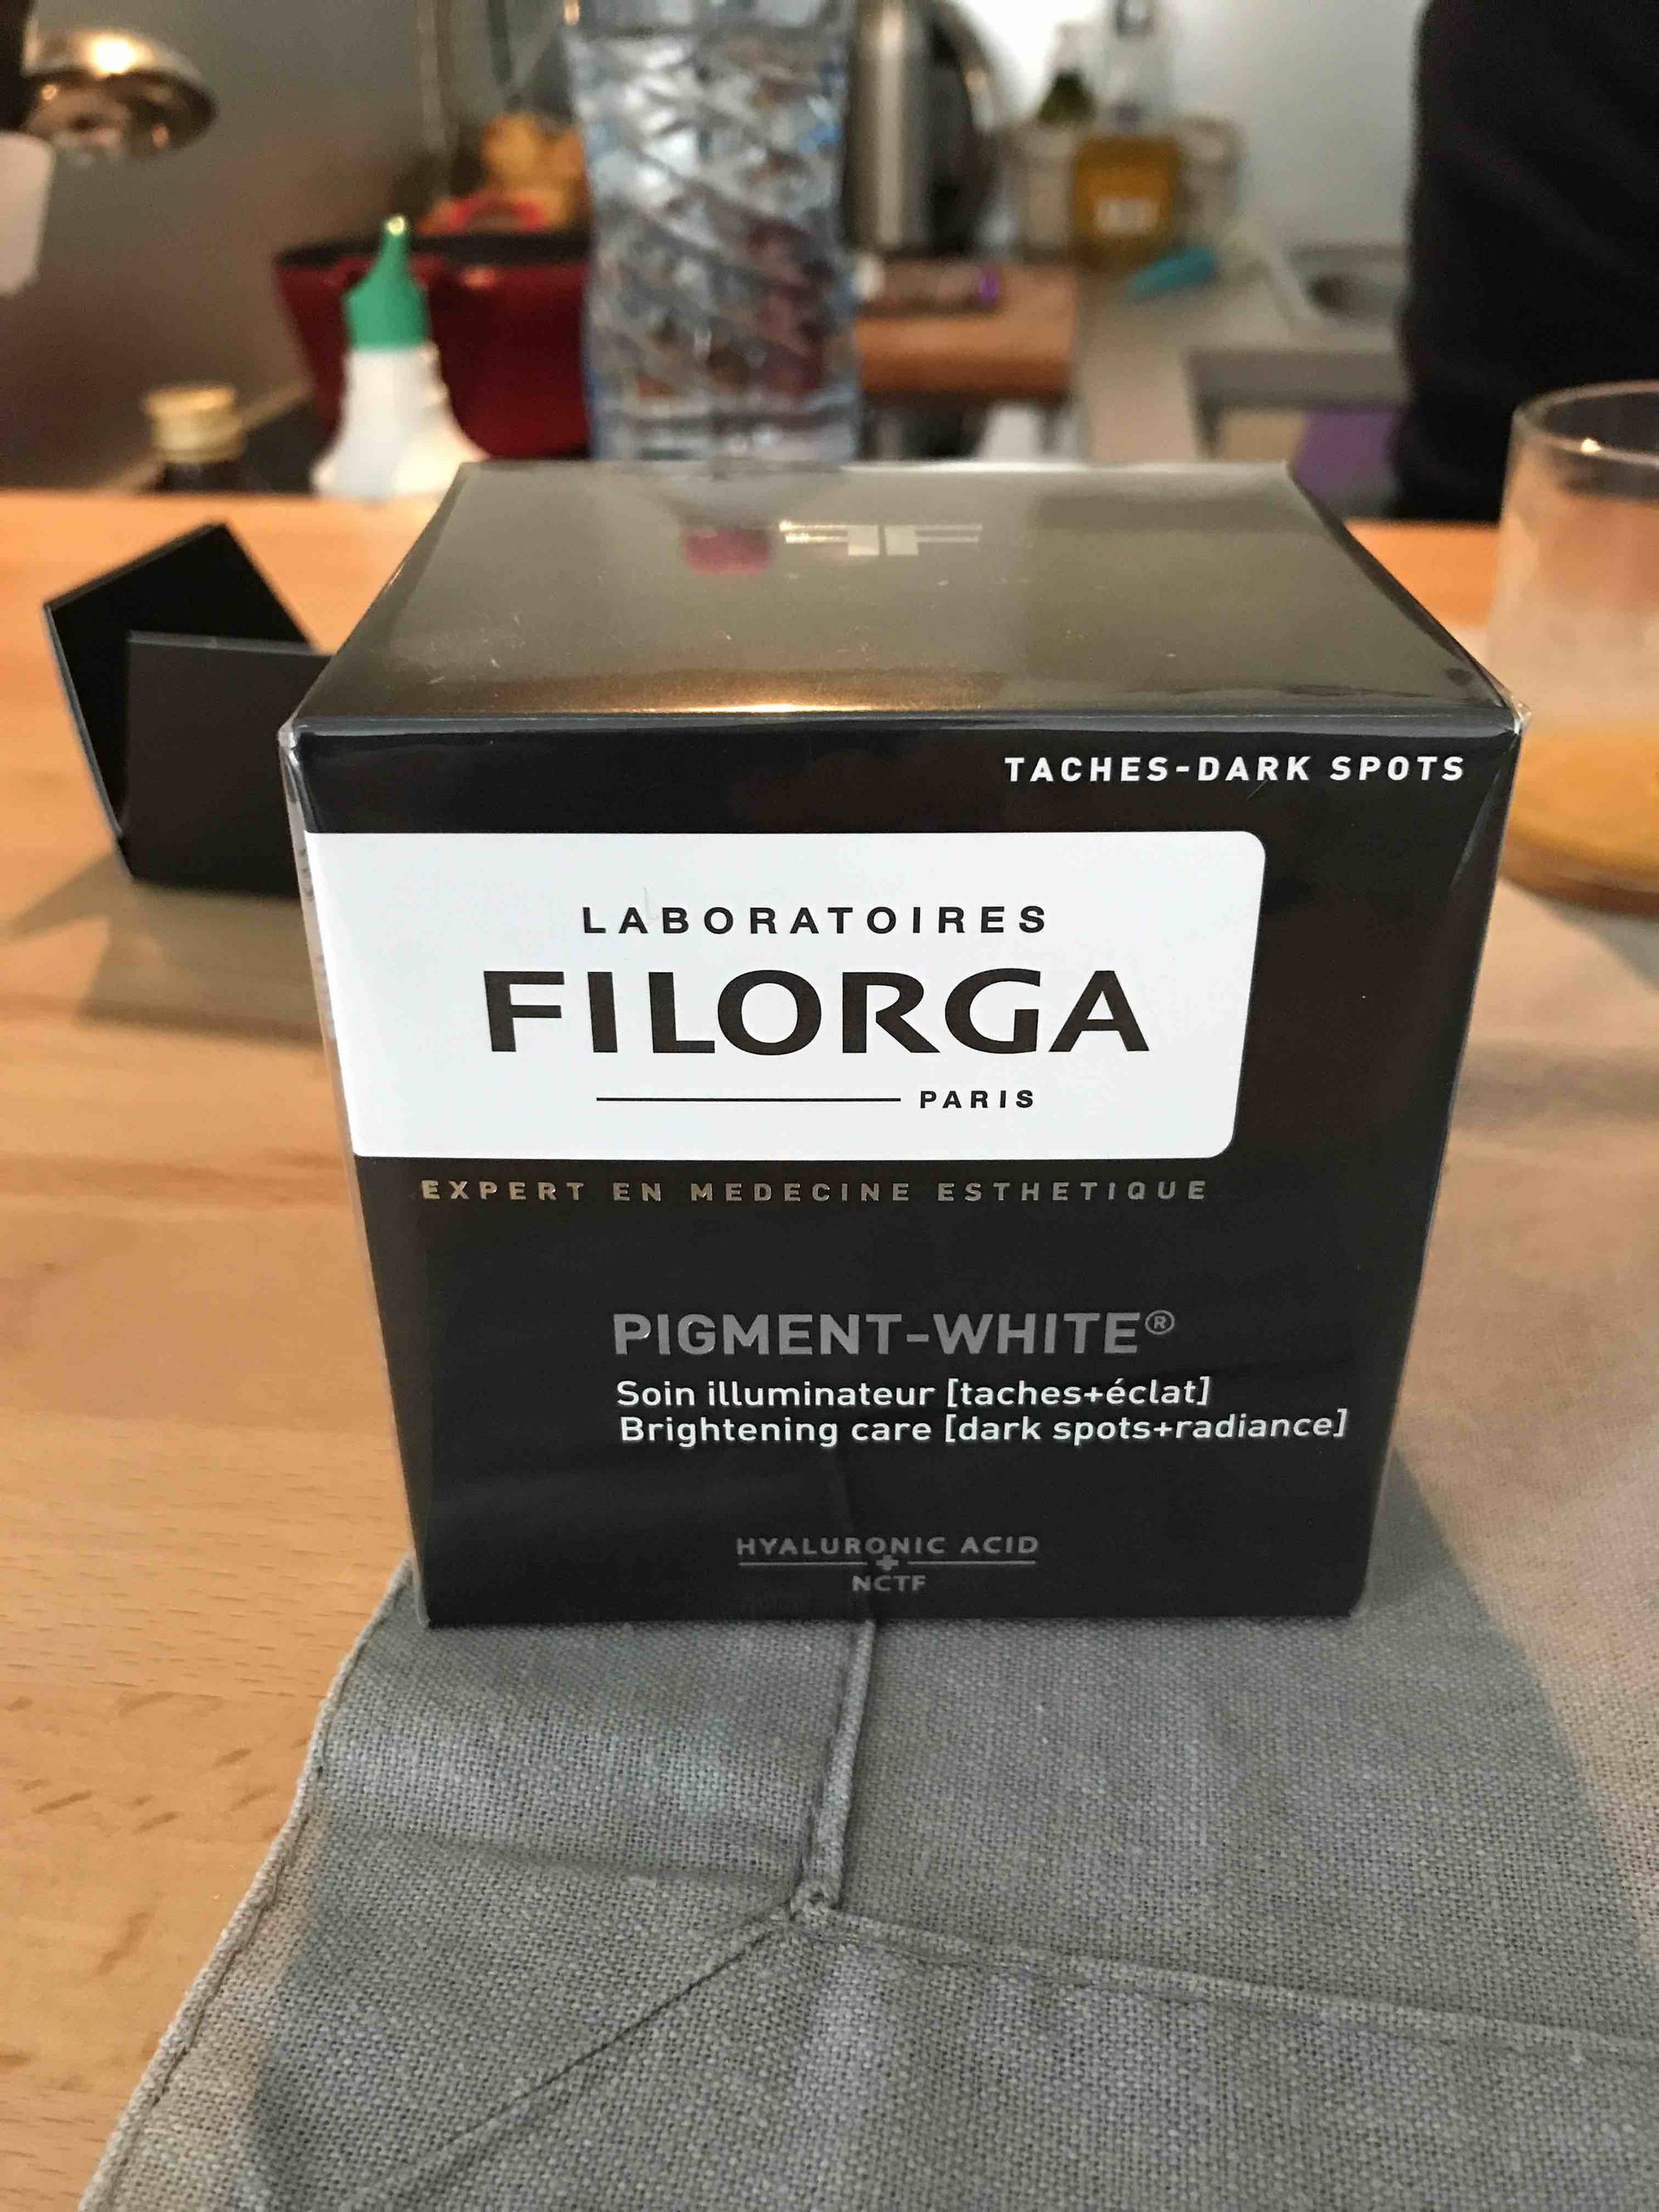 FILORGA PARIS - Pigment-white - Soin illuminateur (taches + éclat)